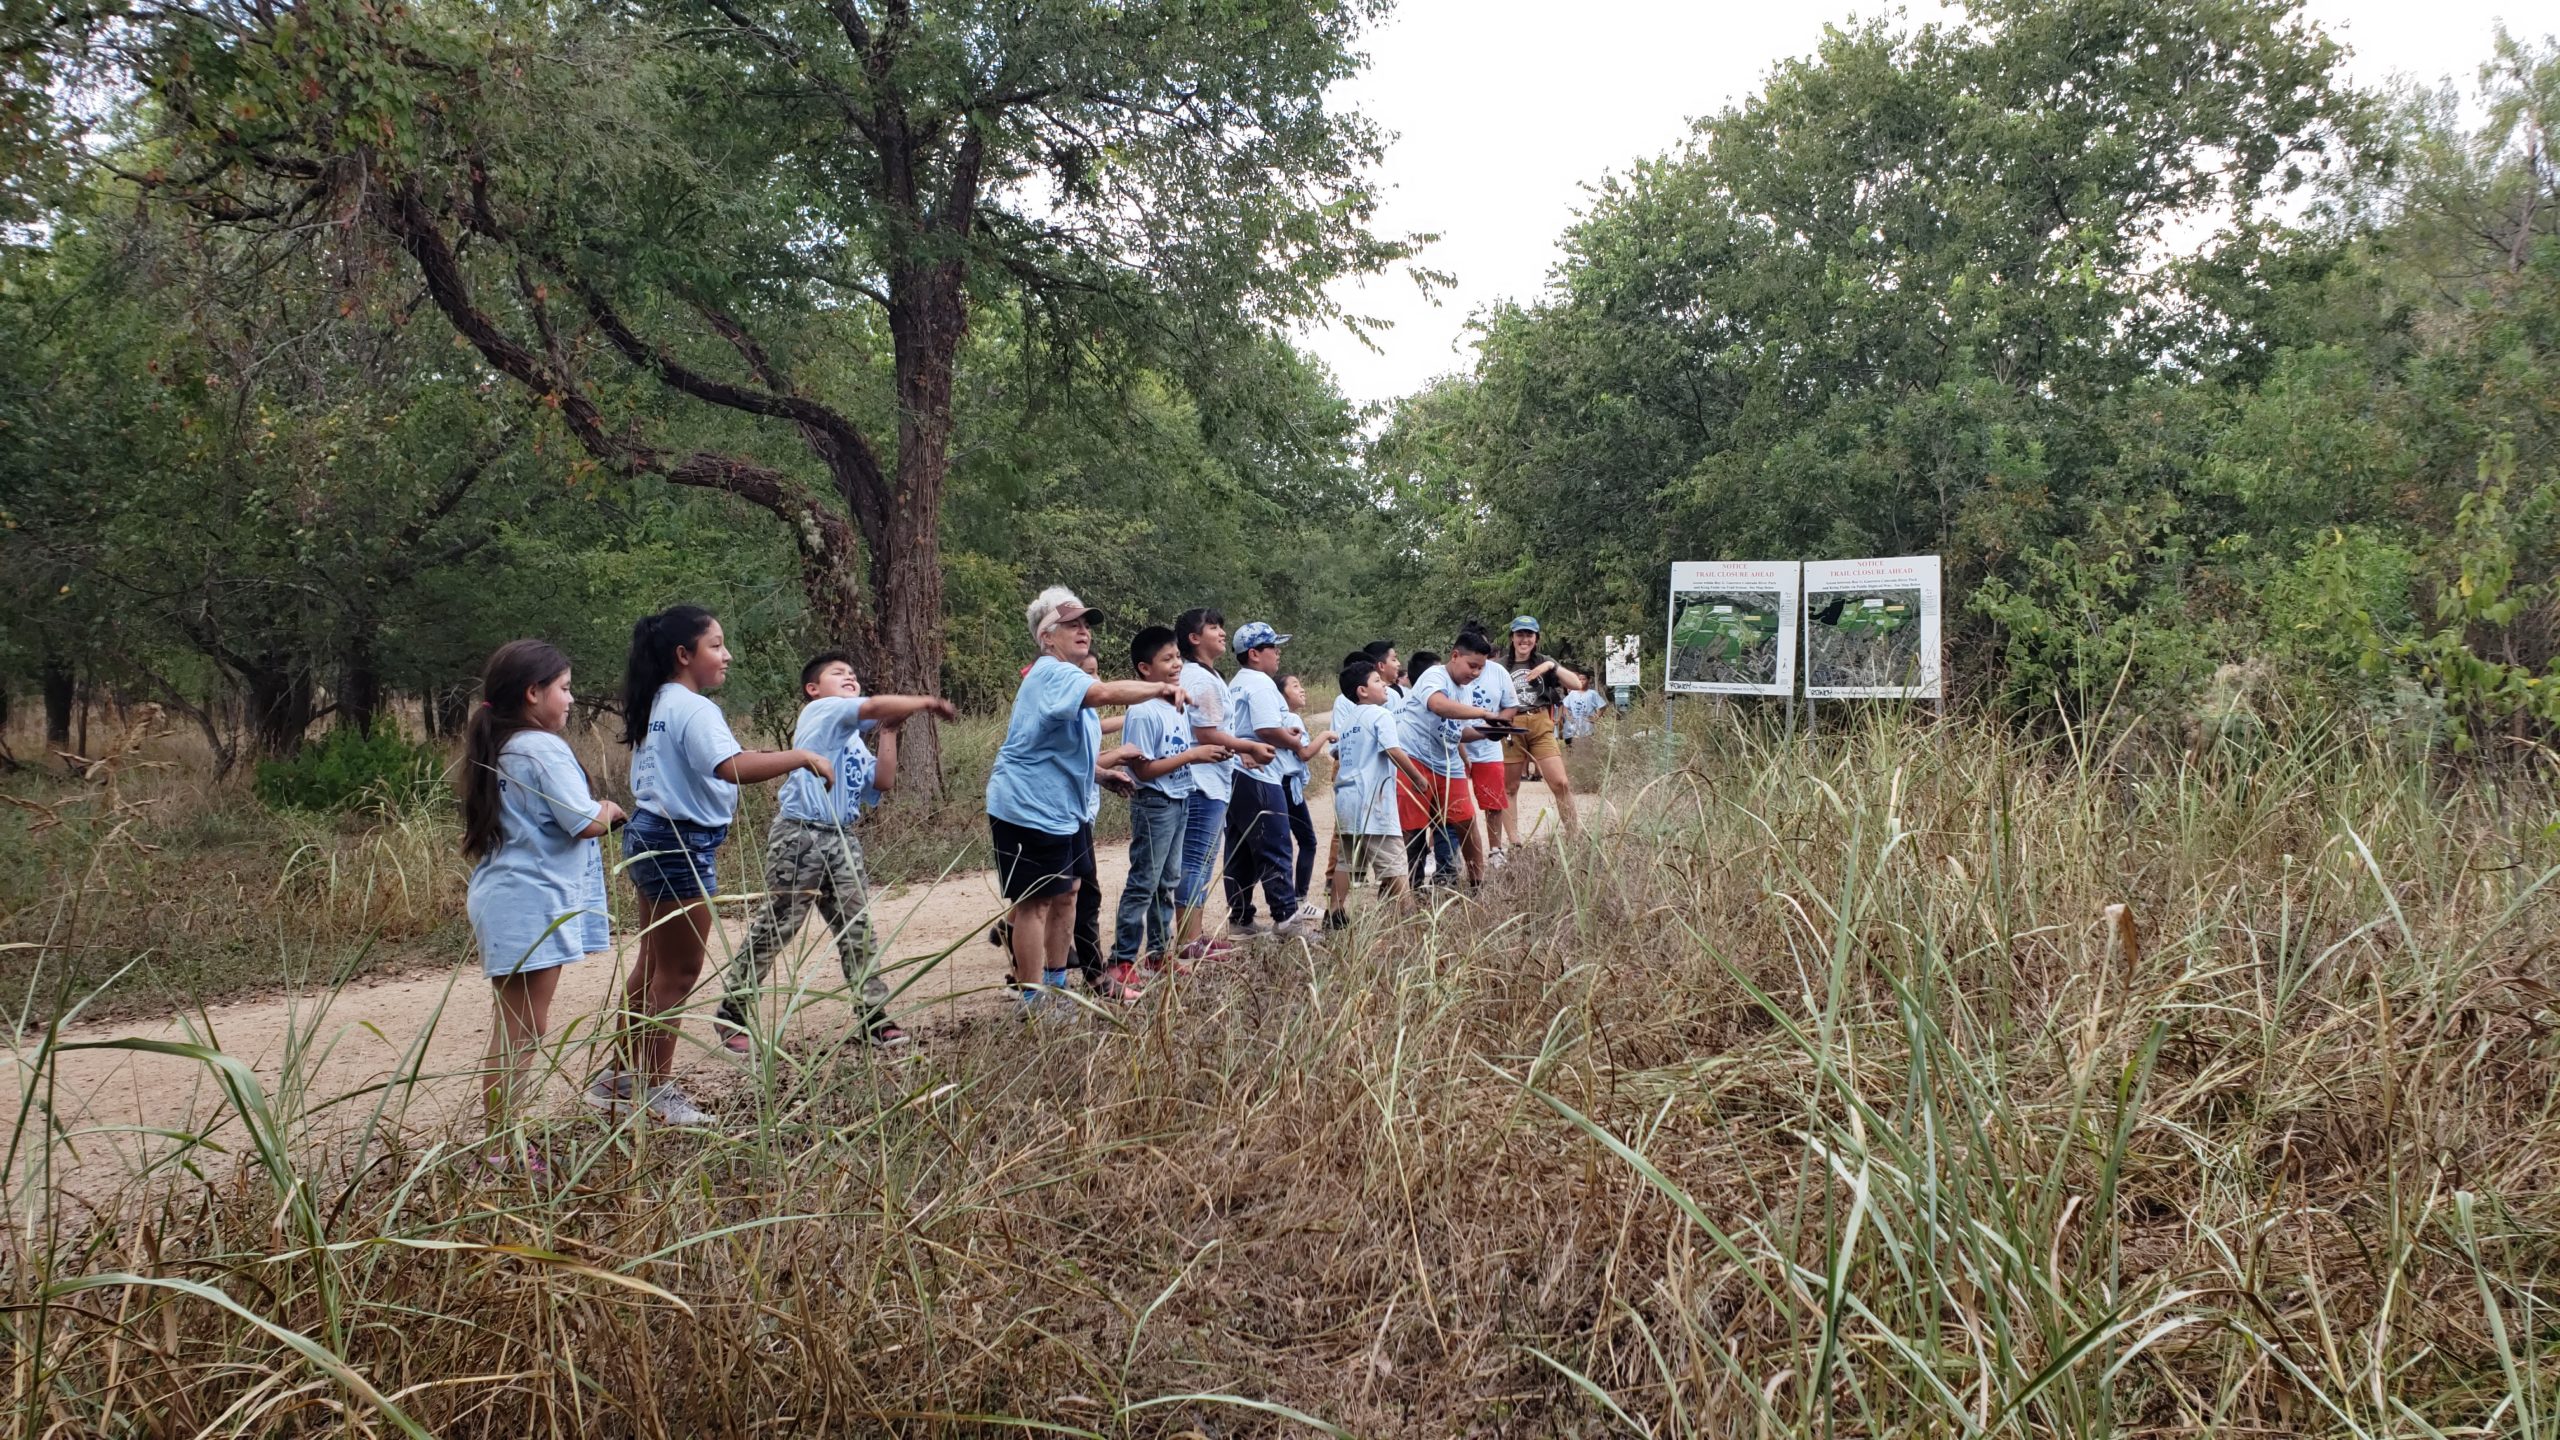 Keep Austin Beautiful Clean Creek Campus students throwing seedballs into tall grass